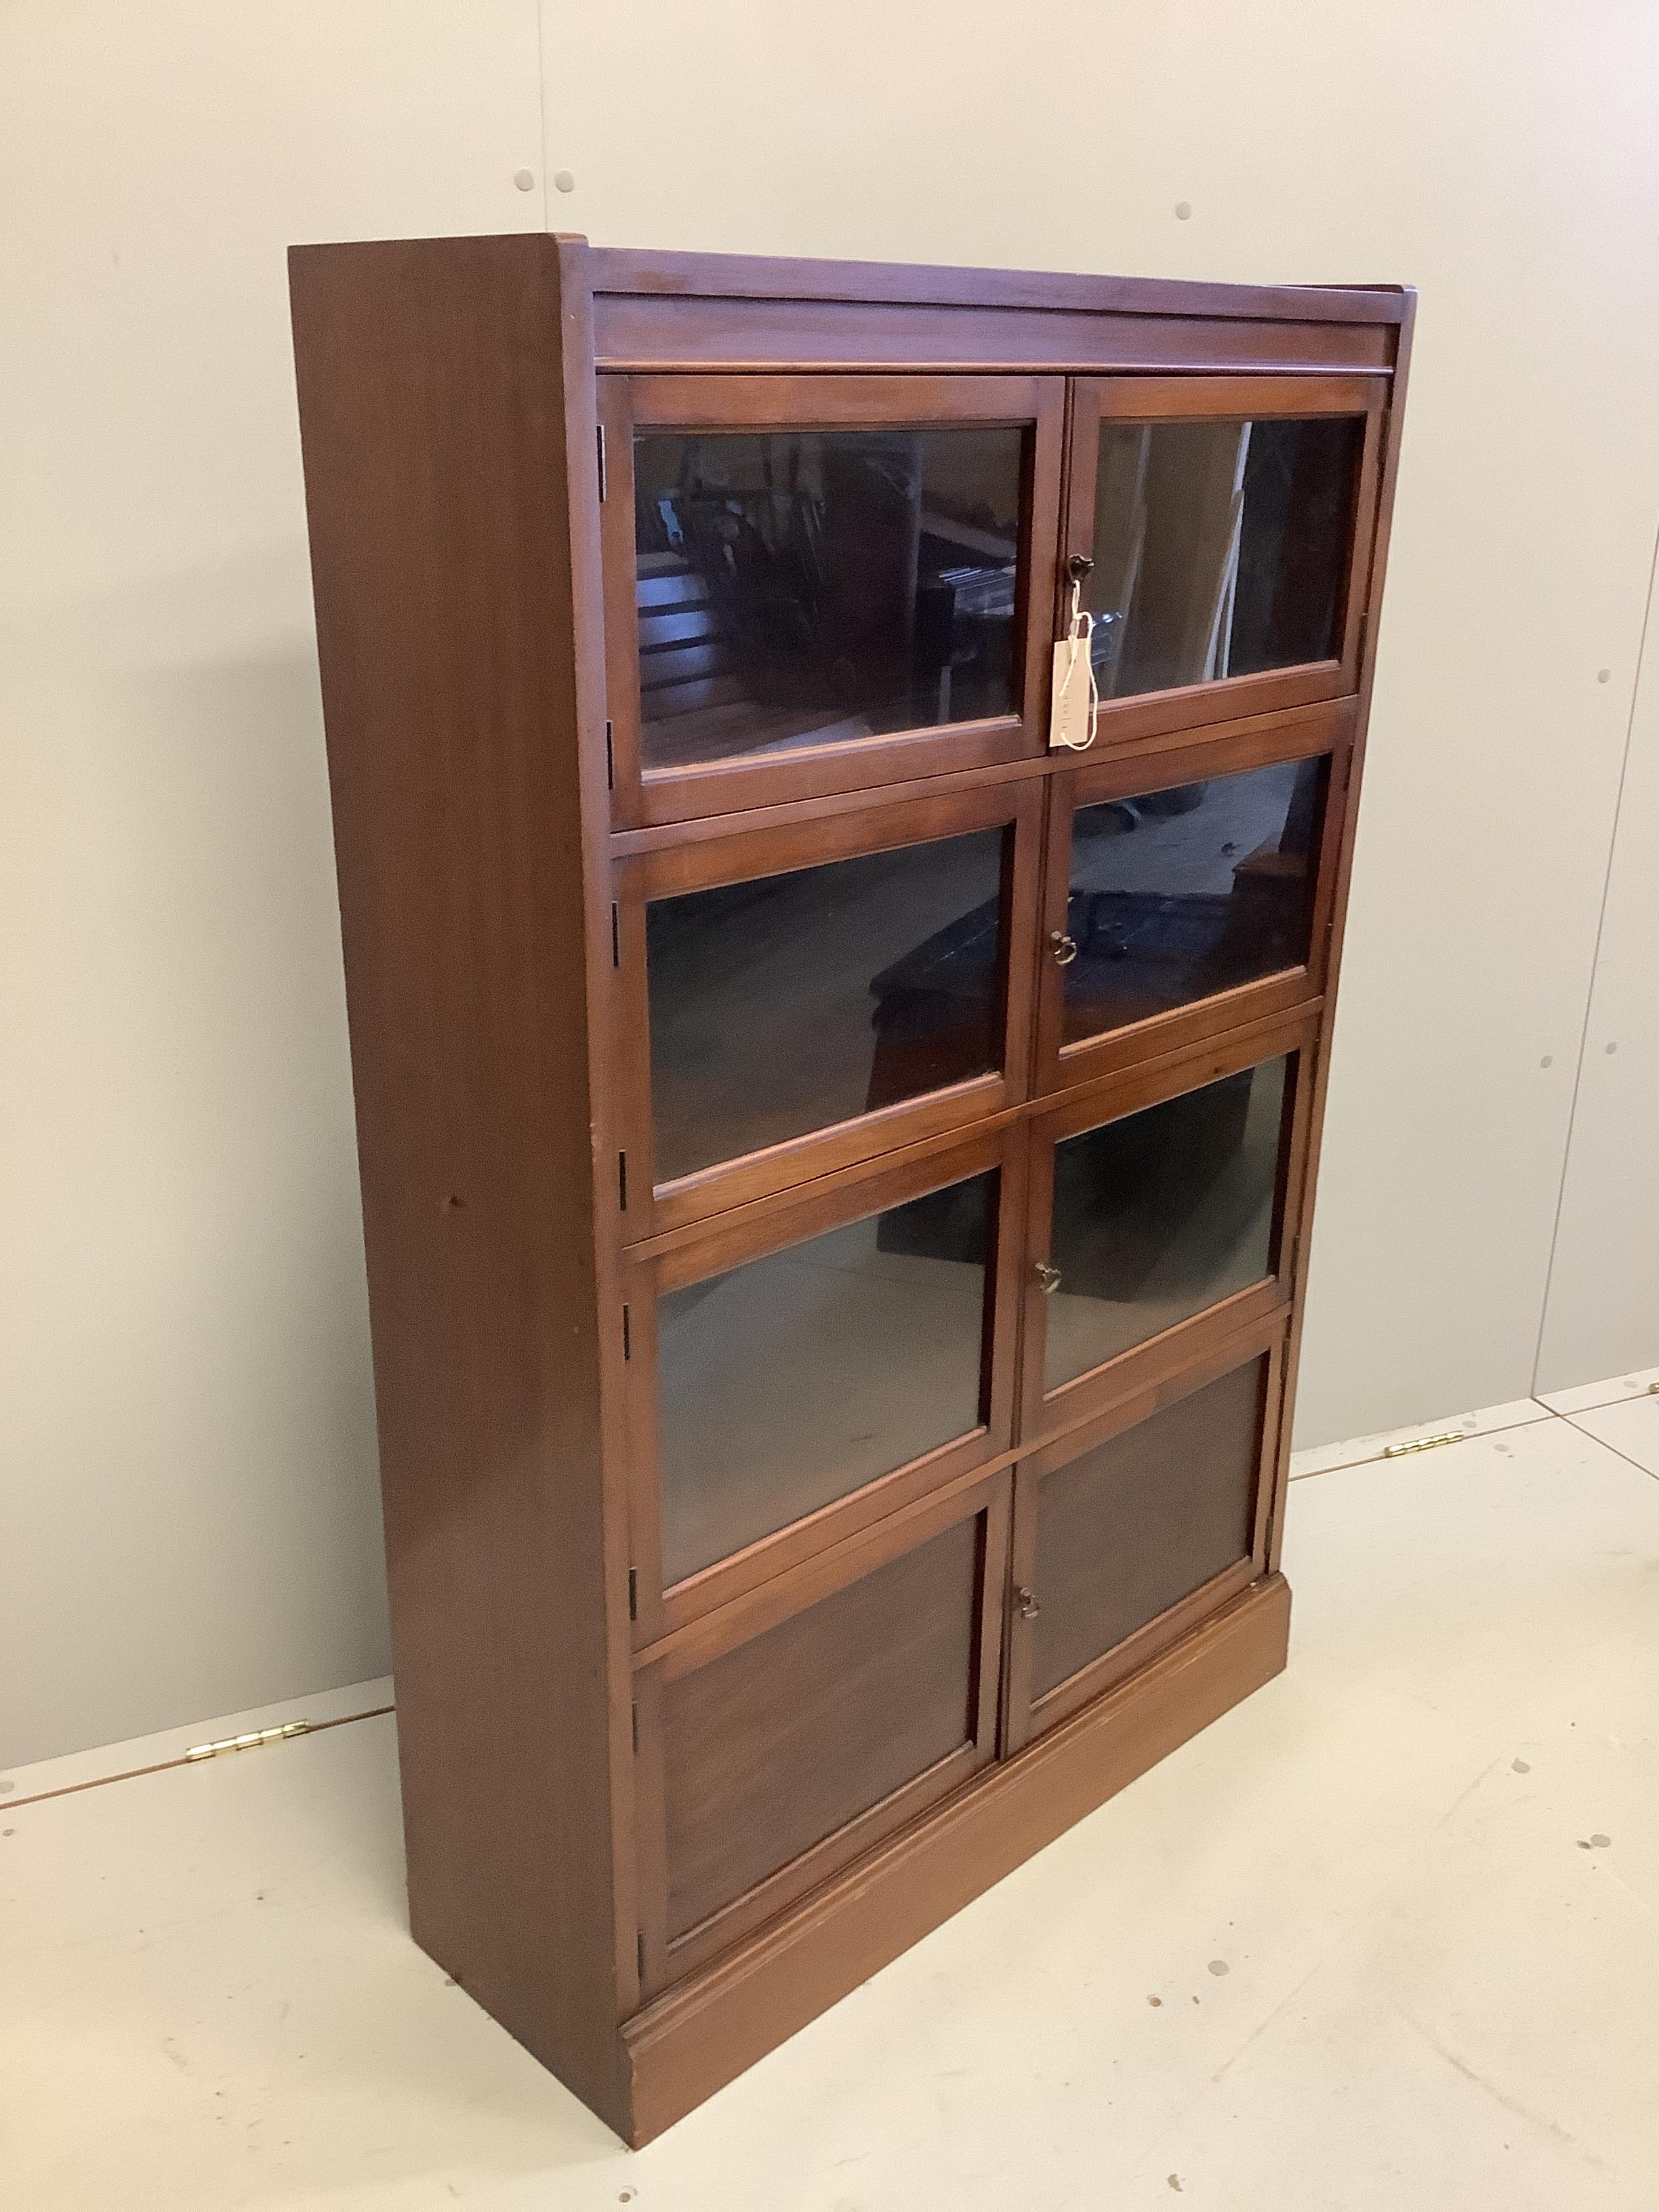 An early 20th century glazed mahogany bookcase, width 81cm, depth 27cm, height 126cm